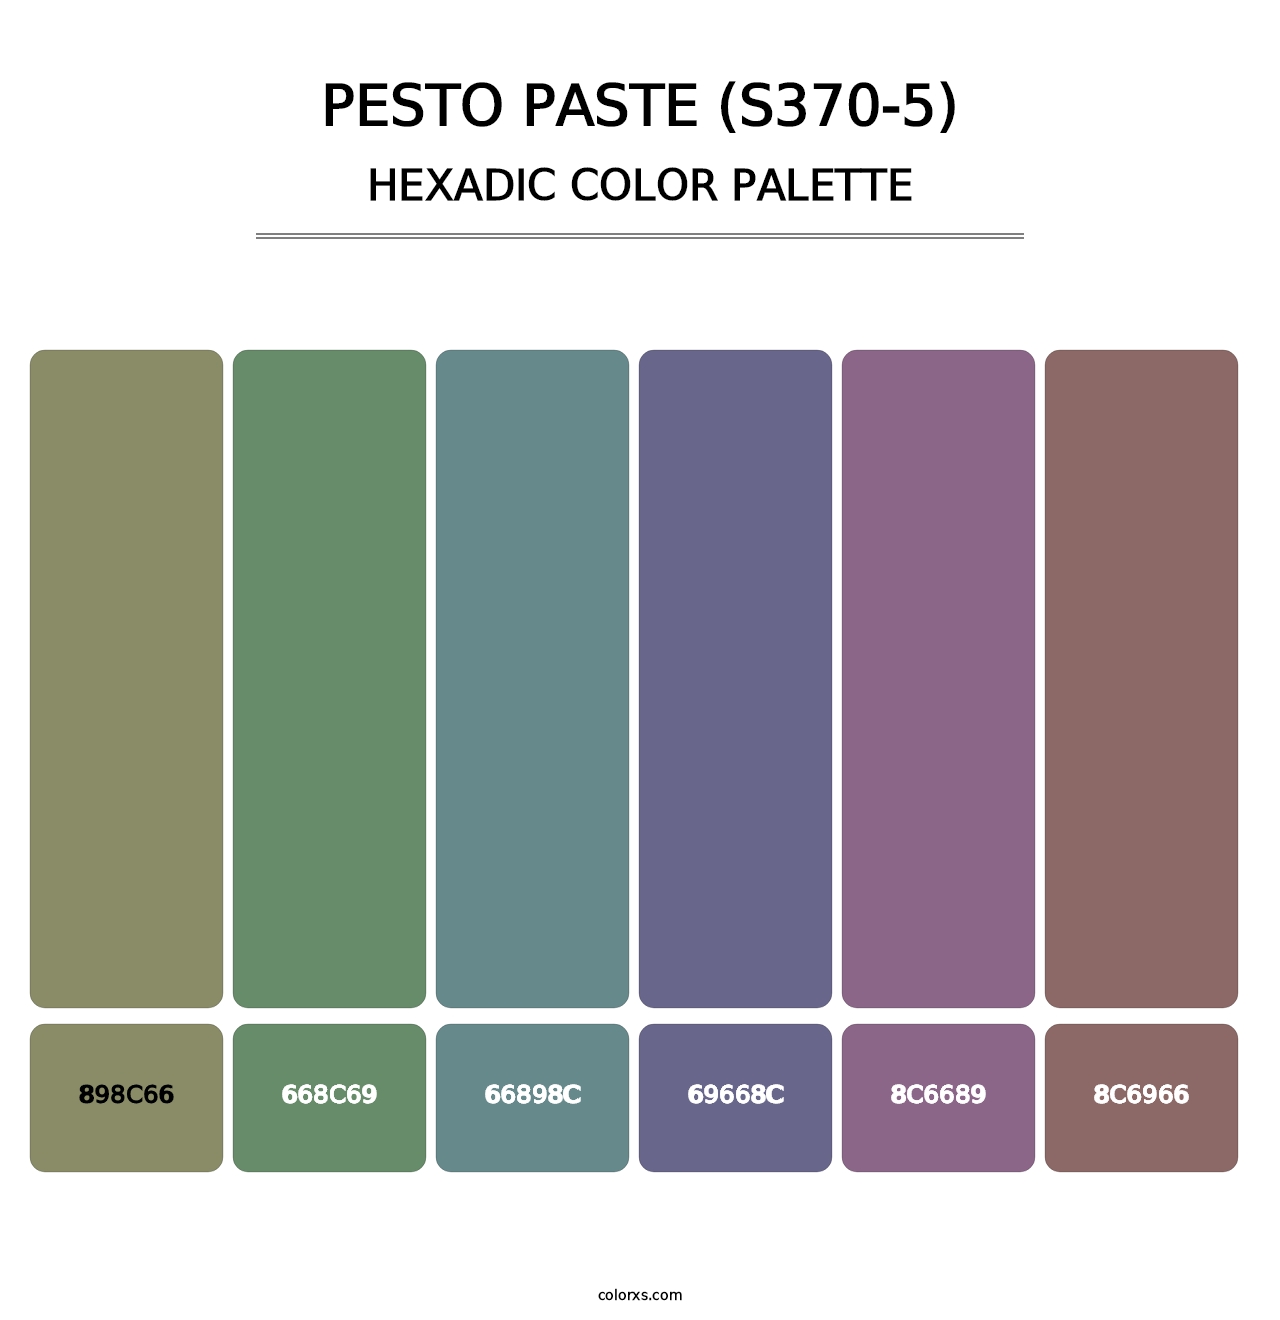 Pesto Paste (S370-5) - Hexadic Color Palette